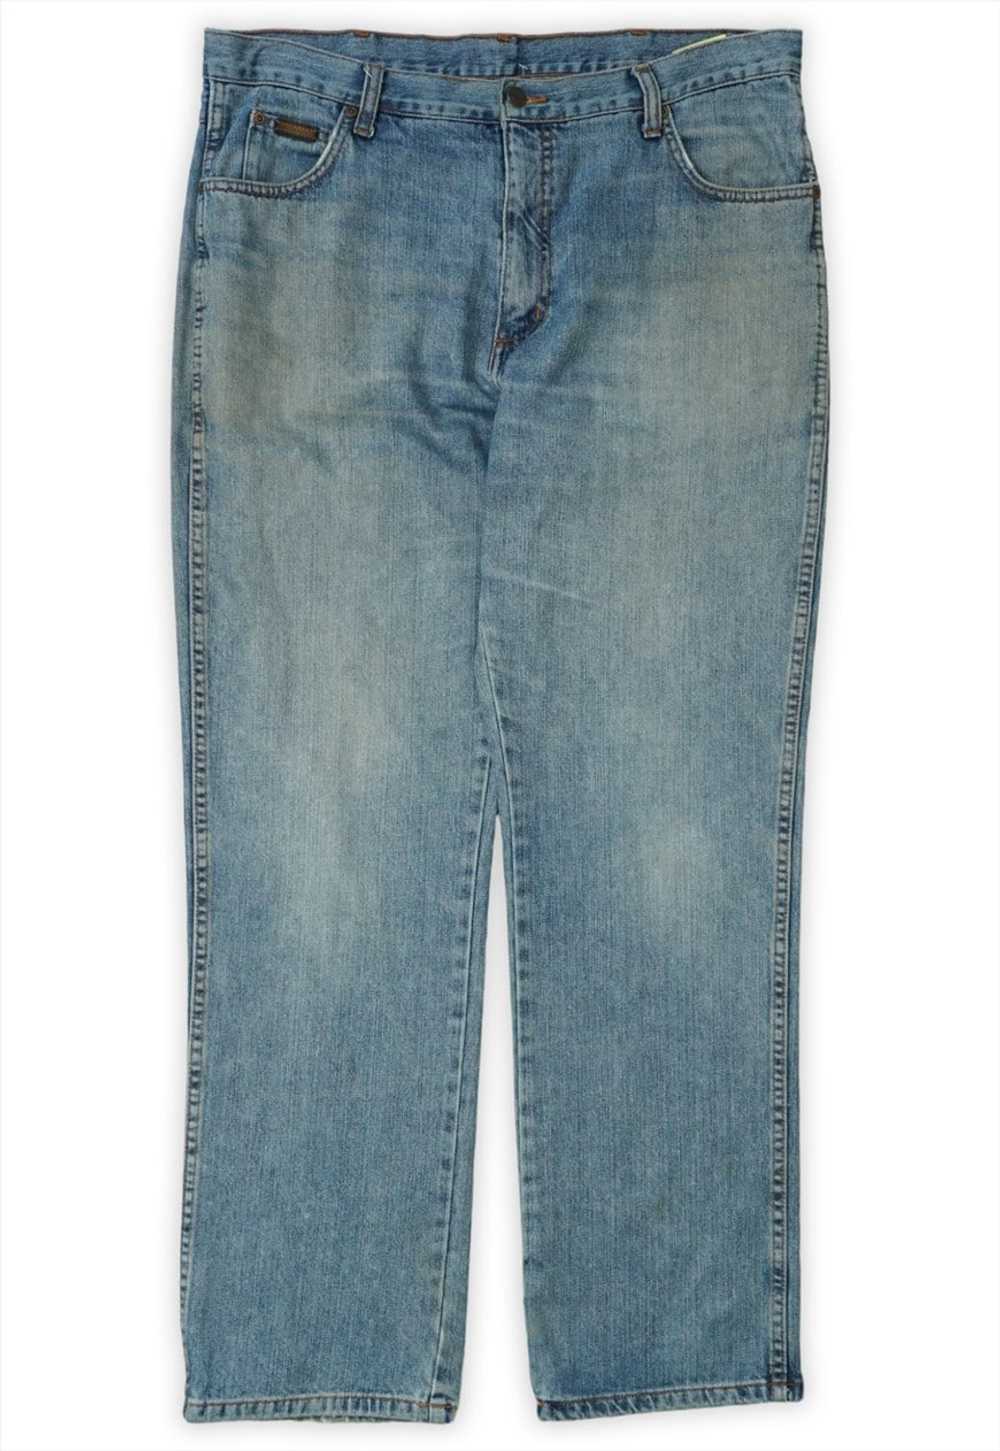 Vintage Wrangler Texas Blue Jeans Womens - image 1